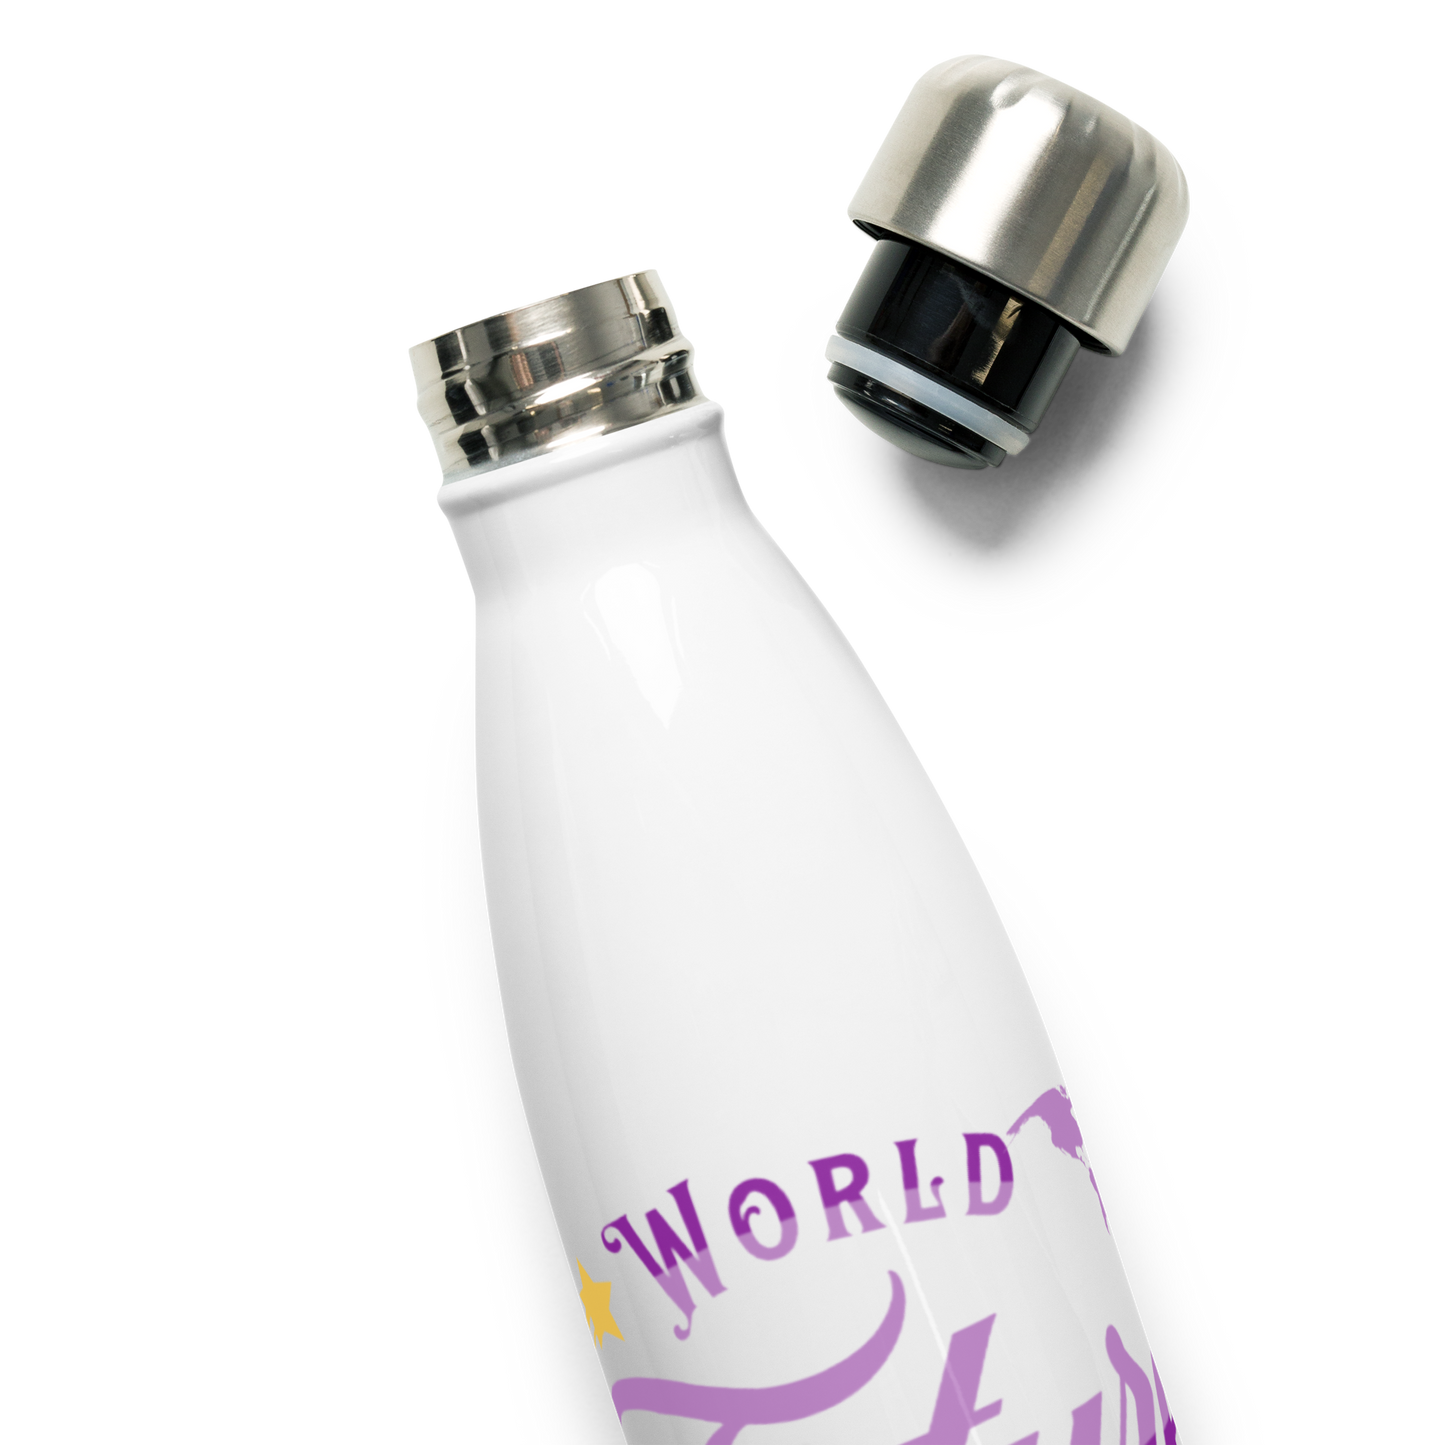 Purple "Future World Changer" Stainless Steel Water Bottle